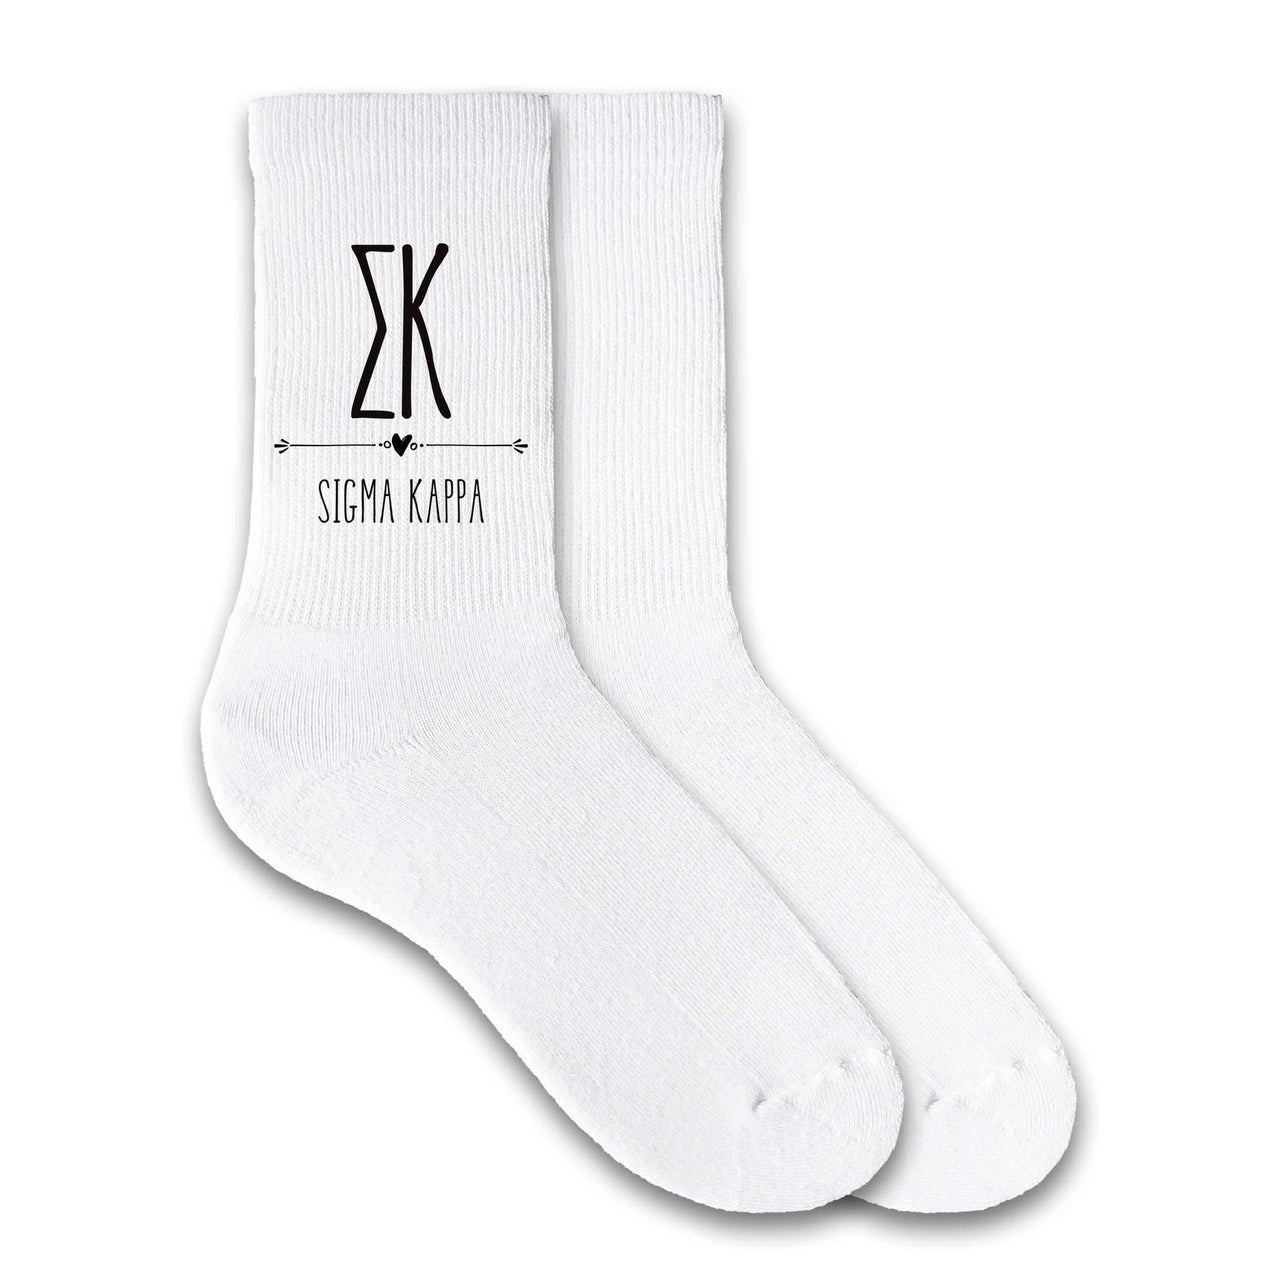 Sigma Kappa sorority letters and name custom printed on cotton crew socks